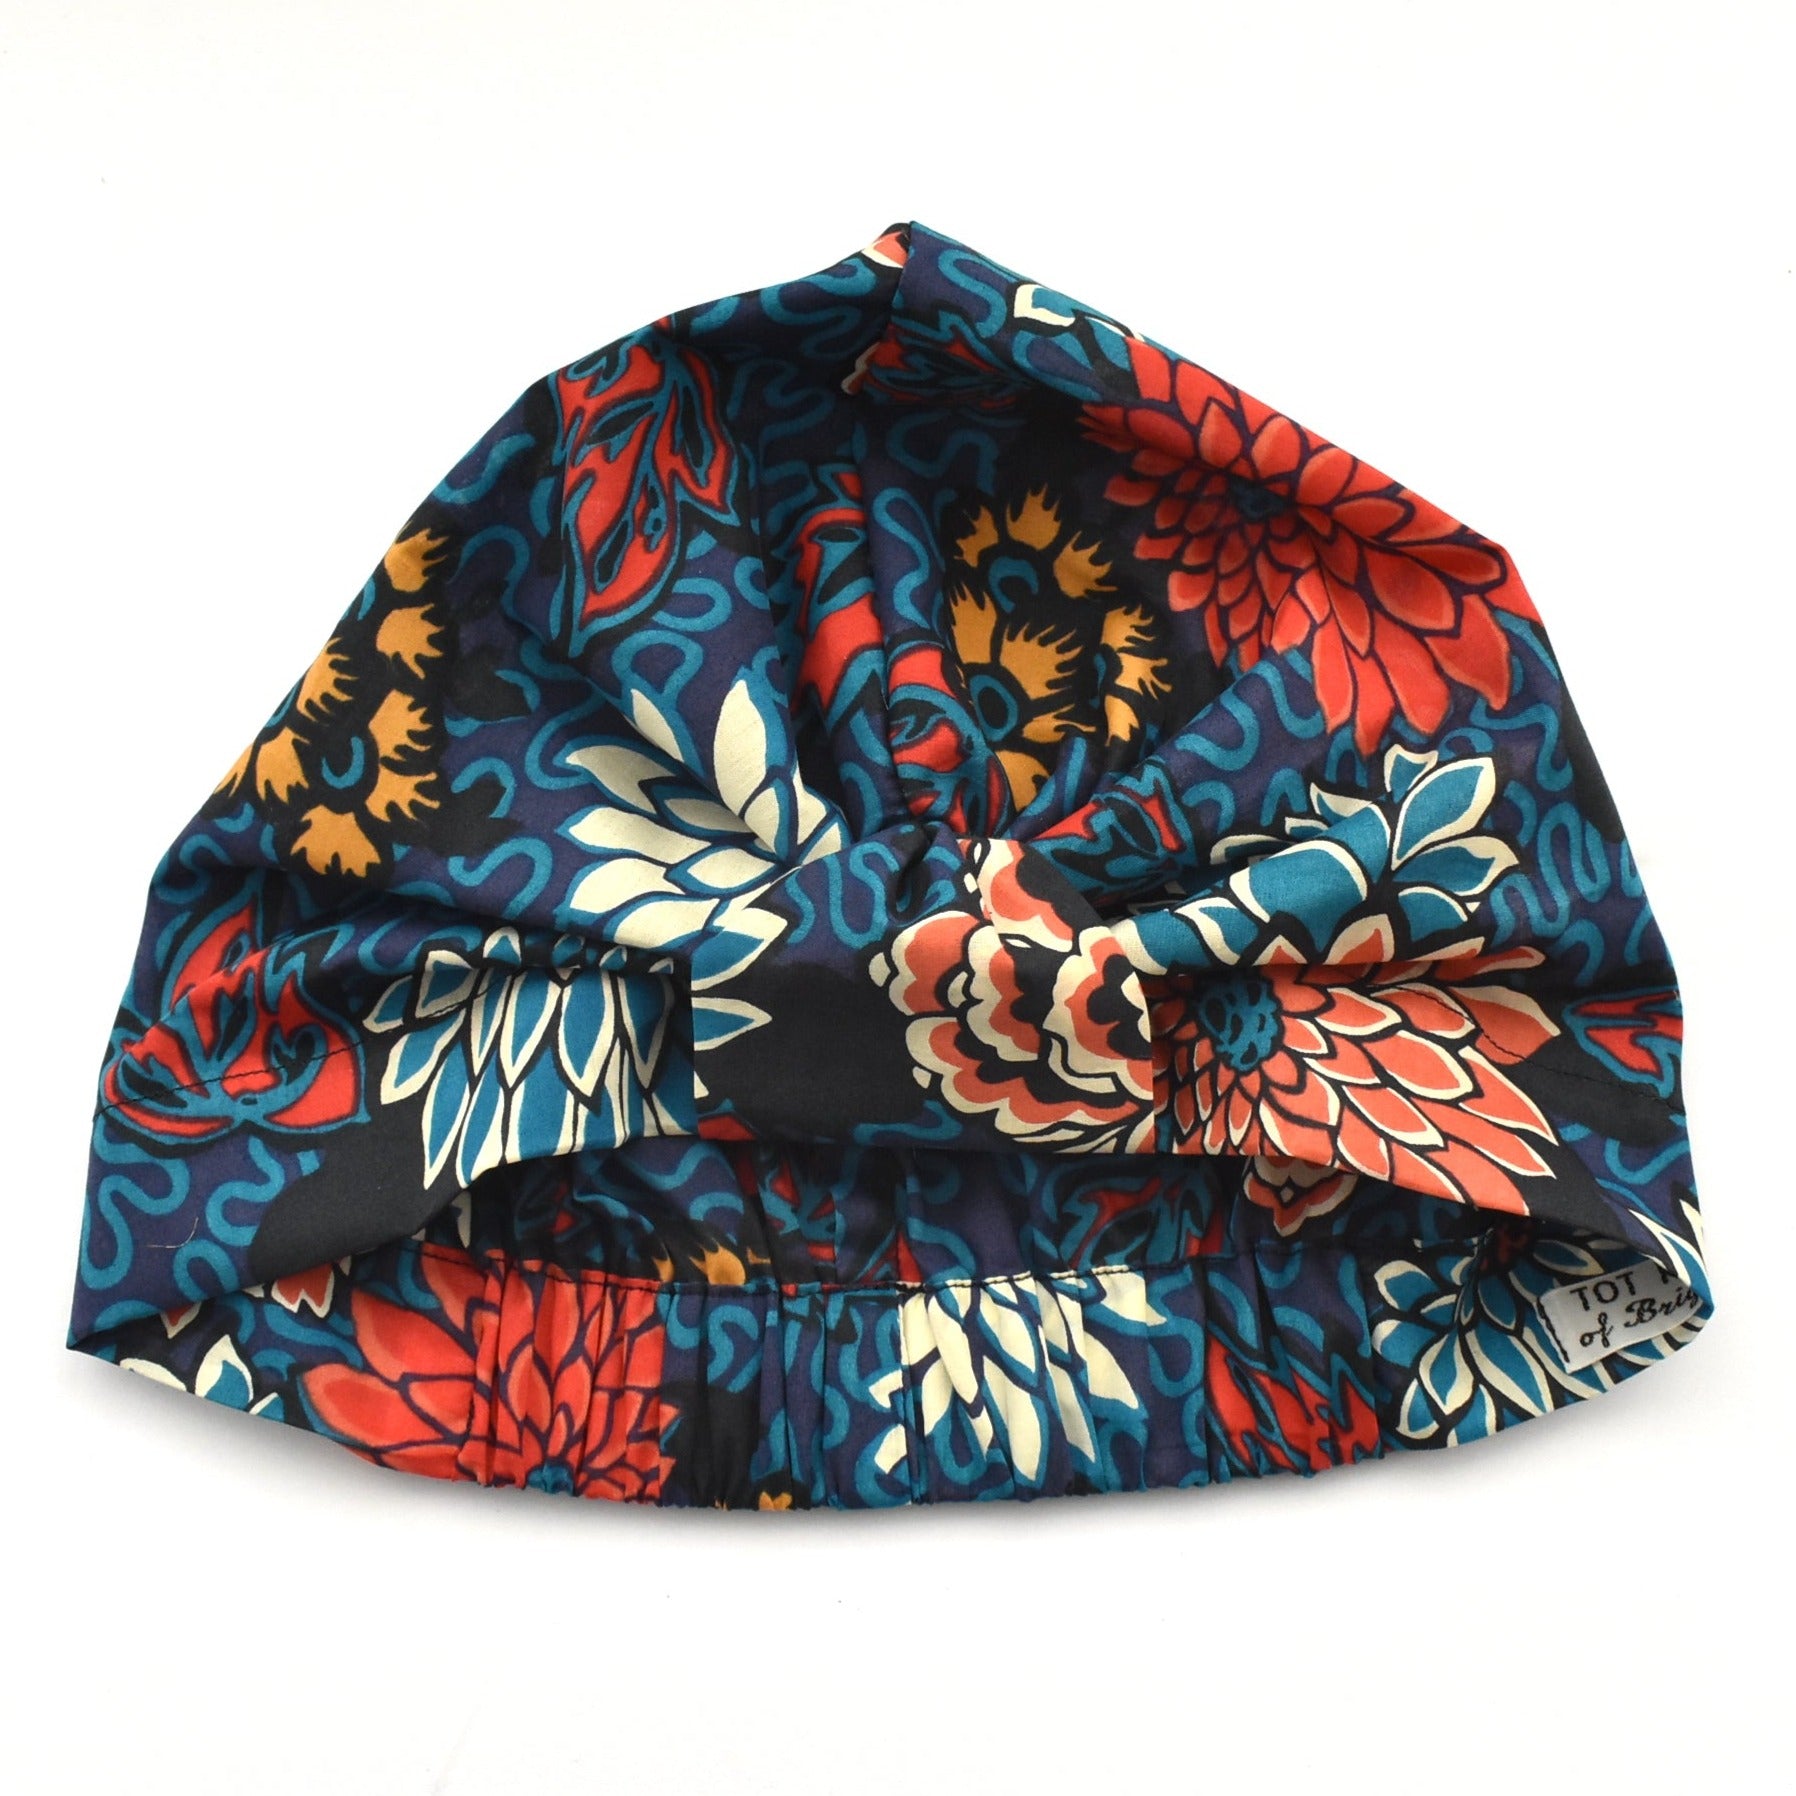 Salty Sea Knot - Swimming Cap Topper - Swim Turban - Vintage Meandering